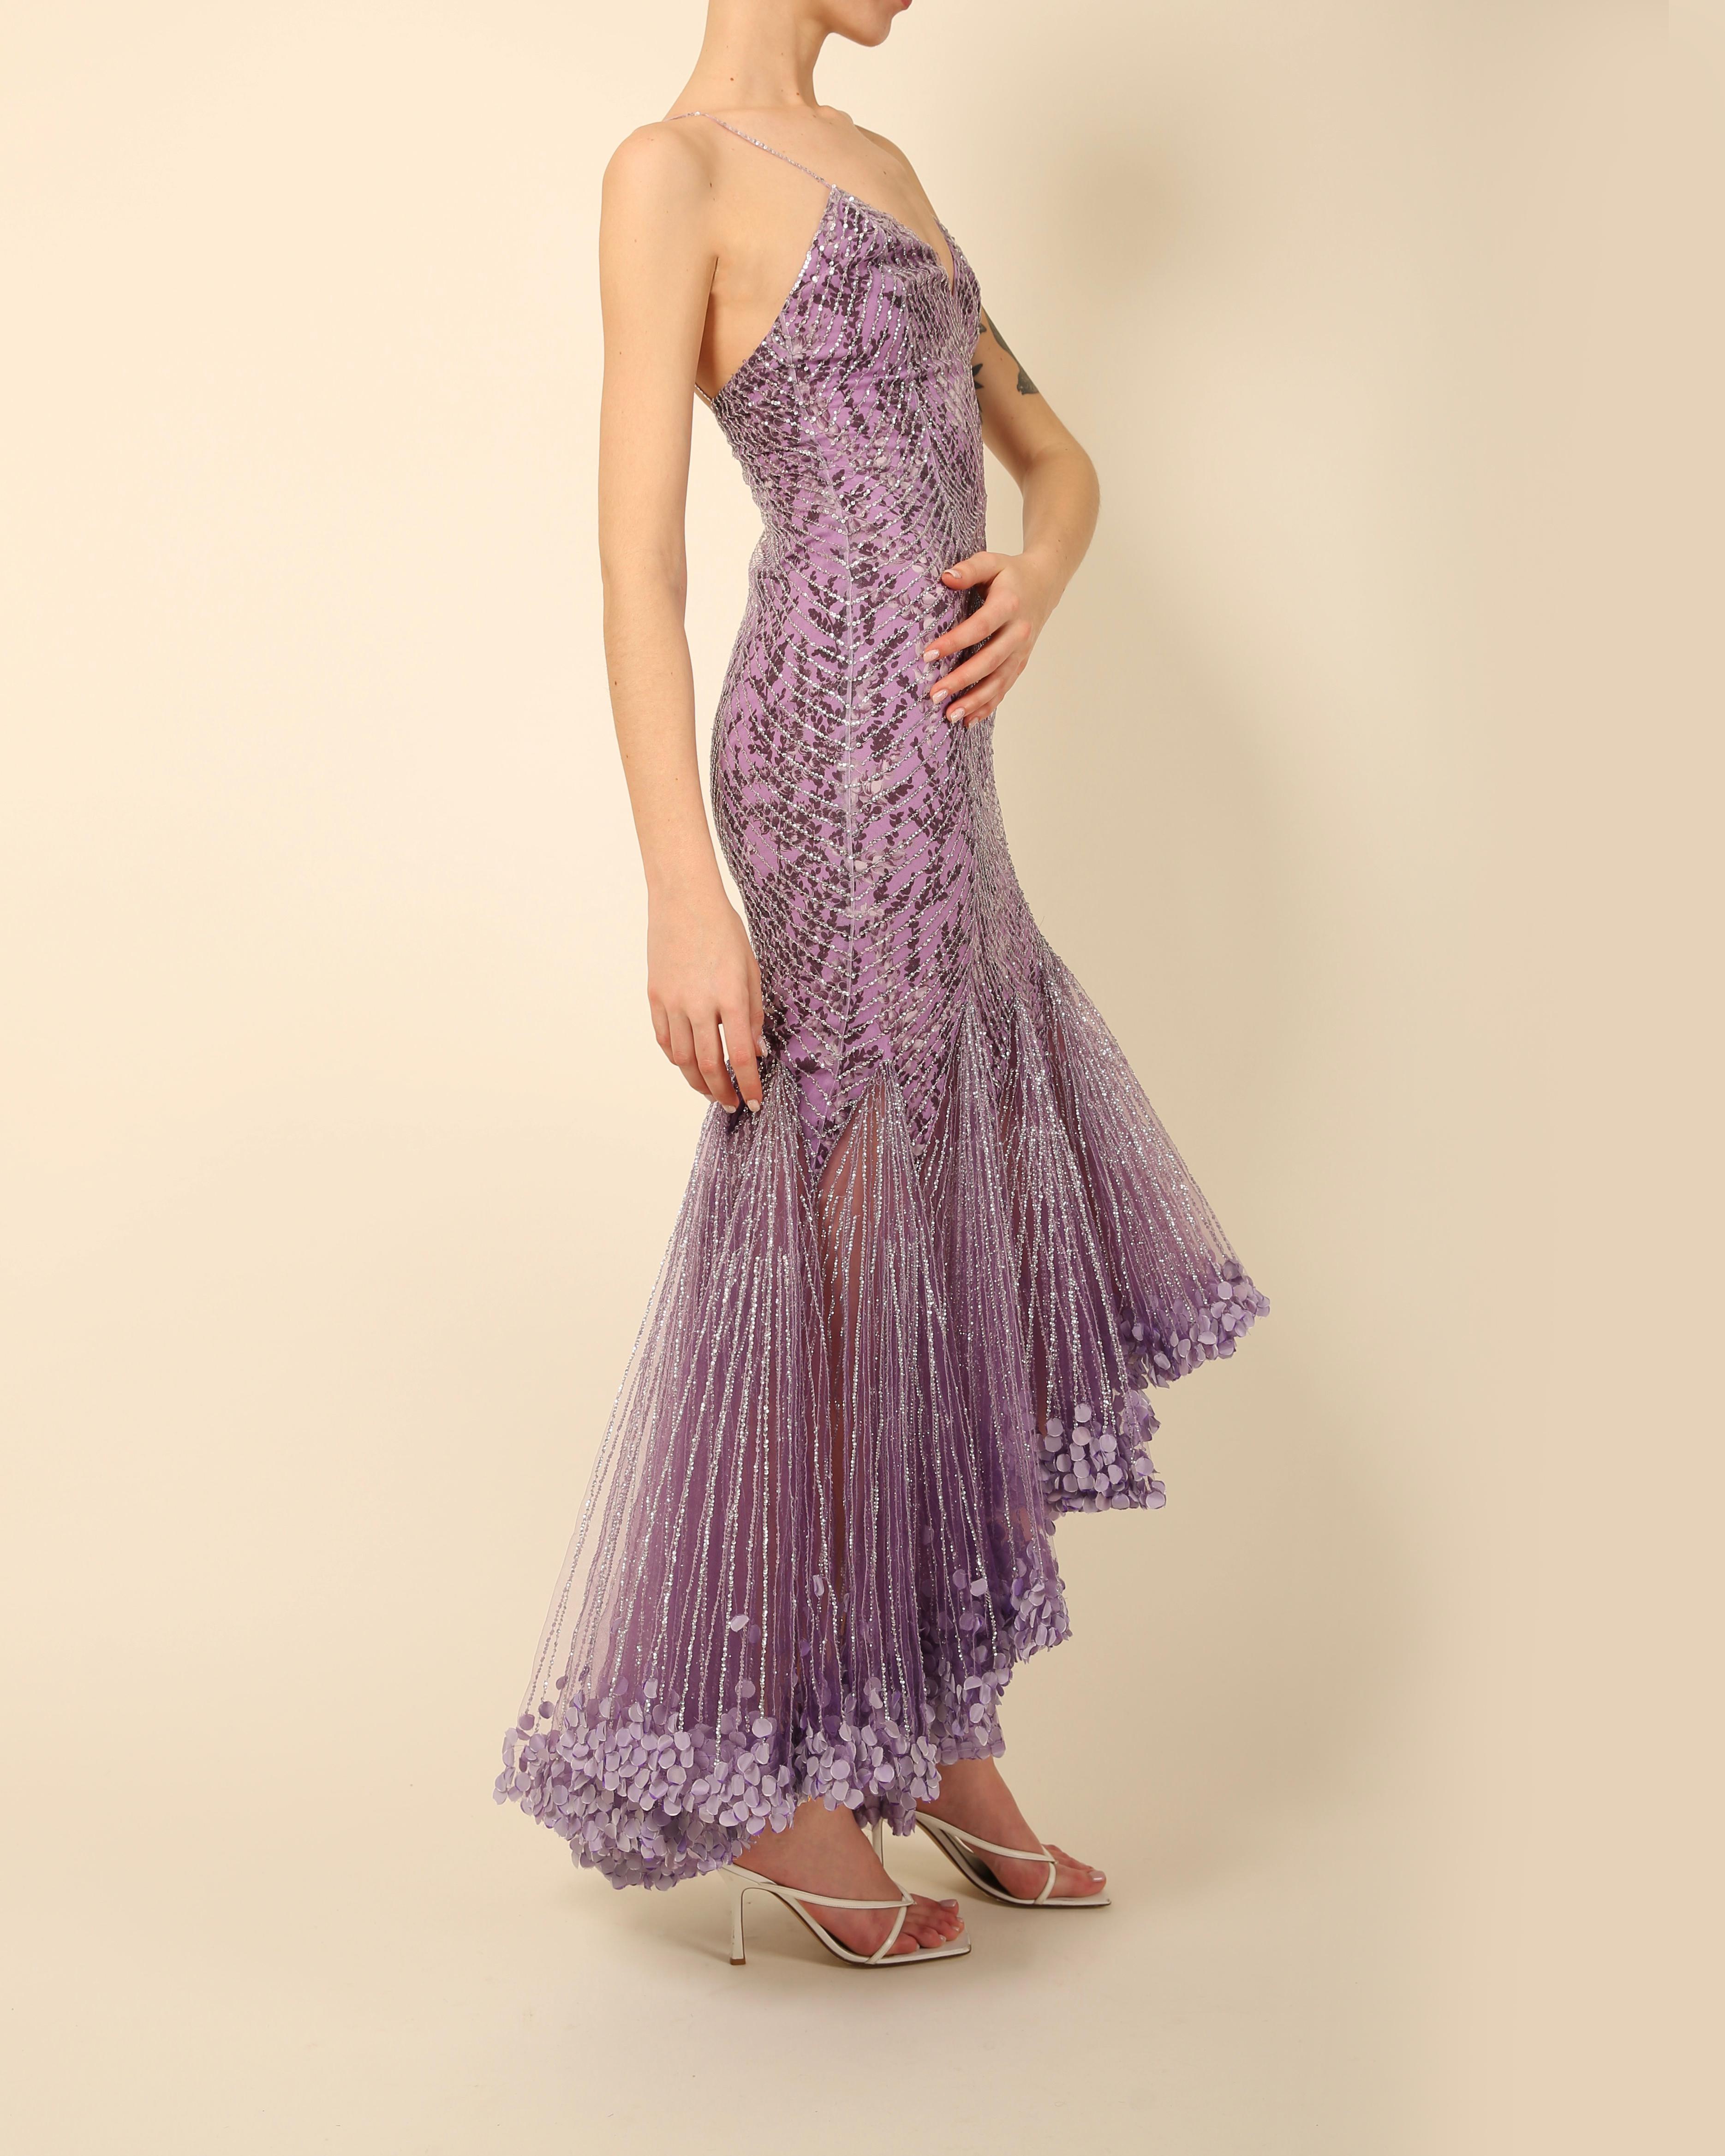 Women's Atelier Versace Couture F/W01 purple black silver sequin low cut silk dress gown